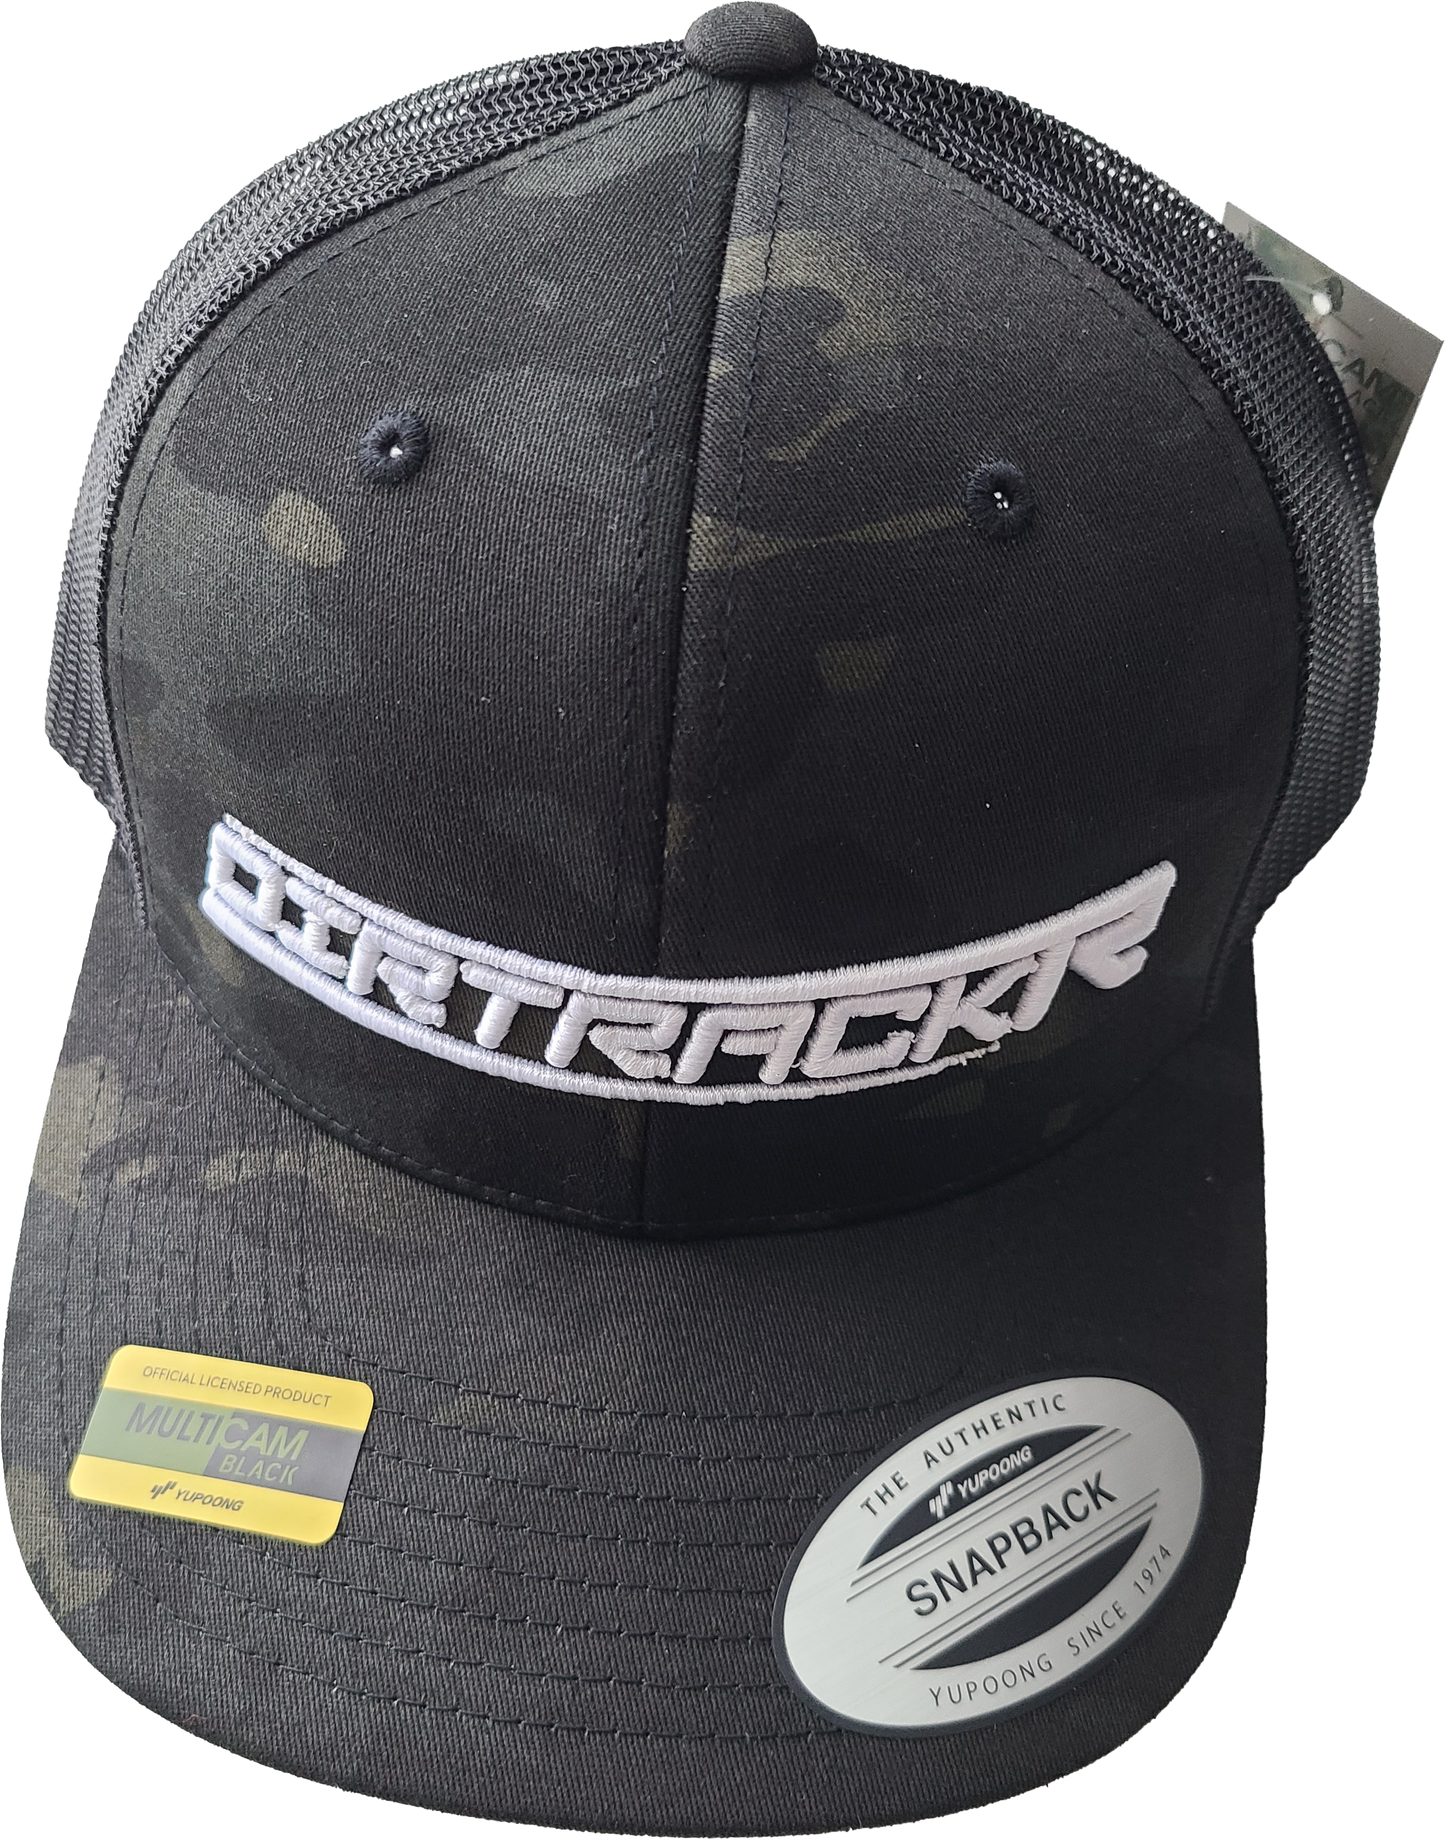 DIRTRACKR Logo Multicam Camo Snapback Trucker Hat